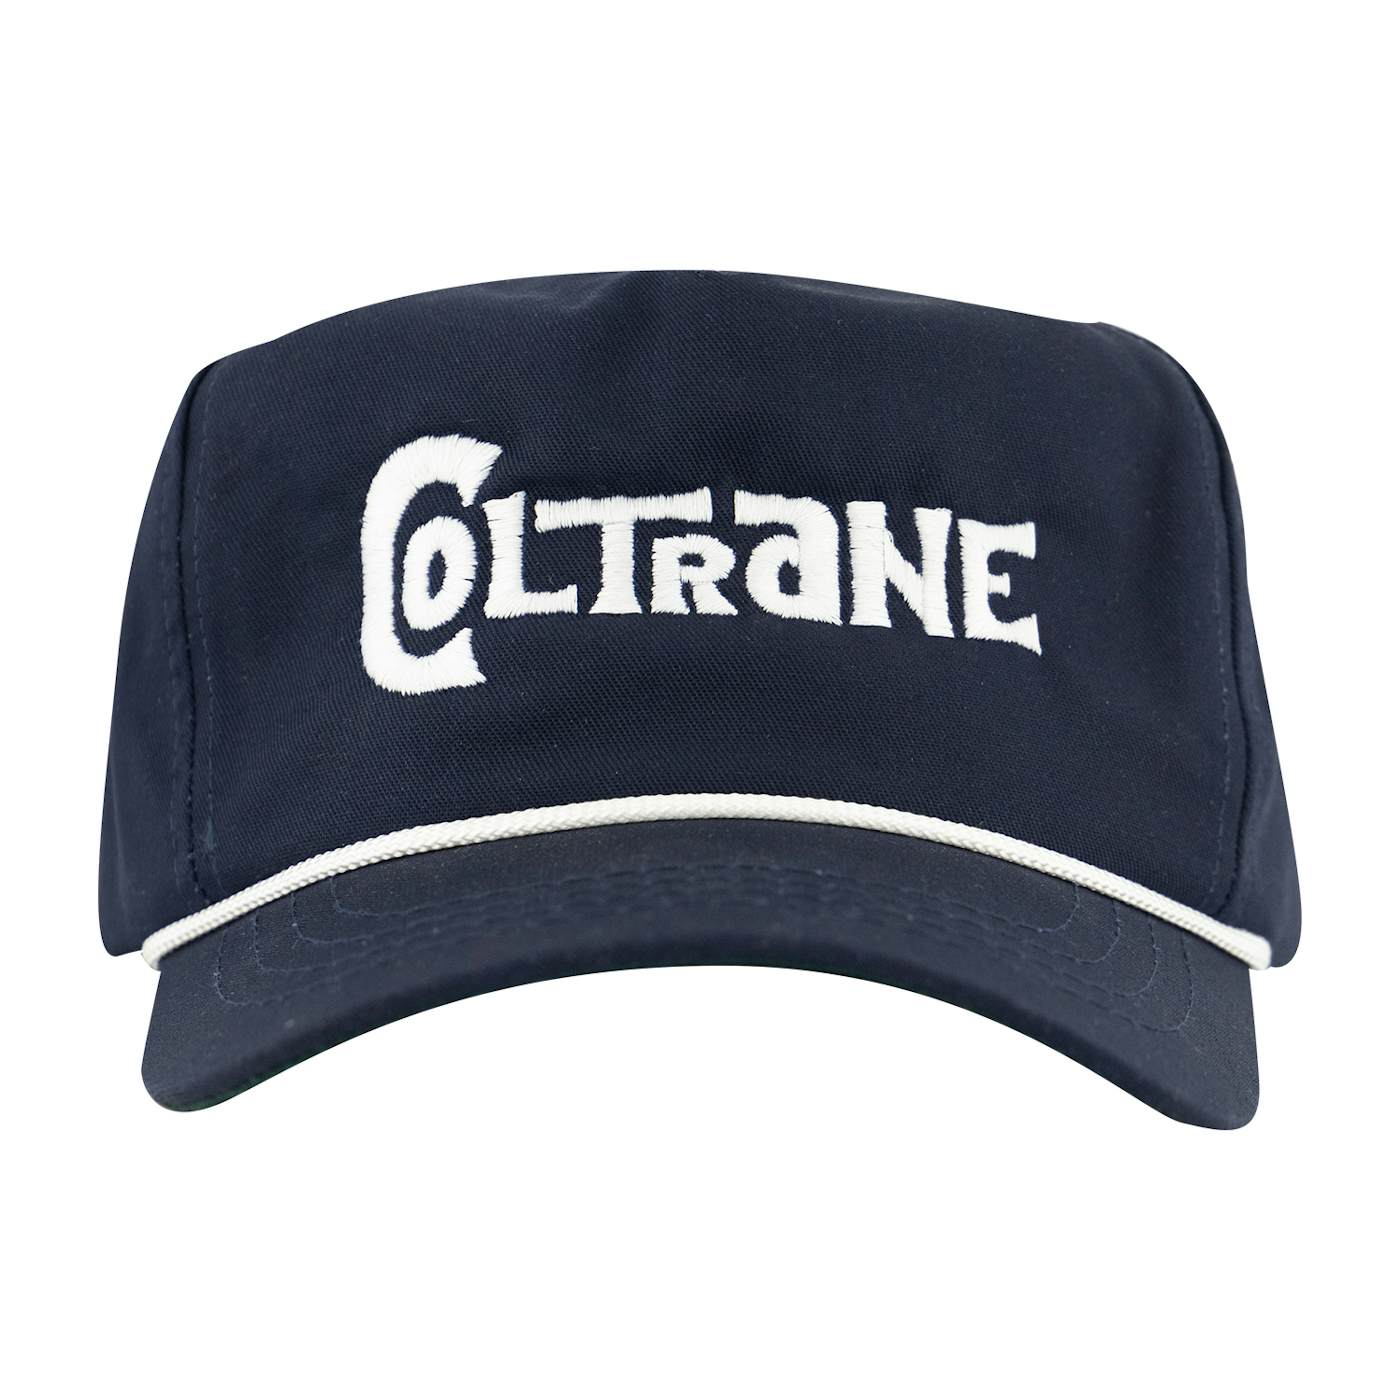 John Coltrane Coltrane Embroidered Navy Hat